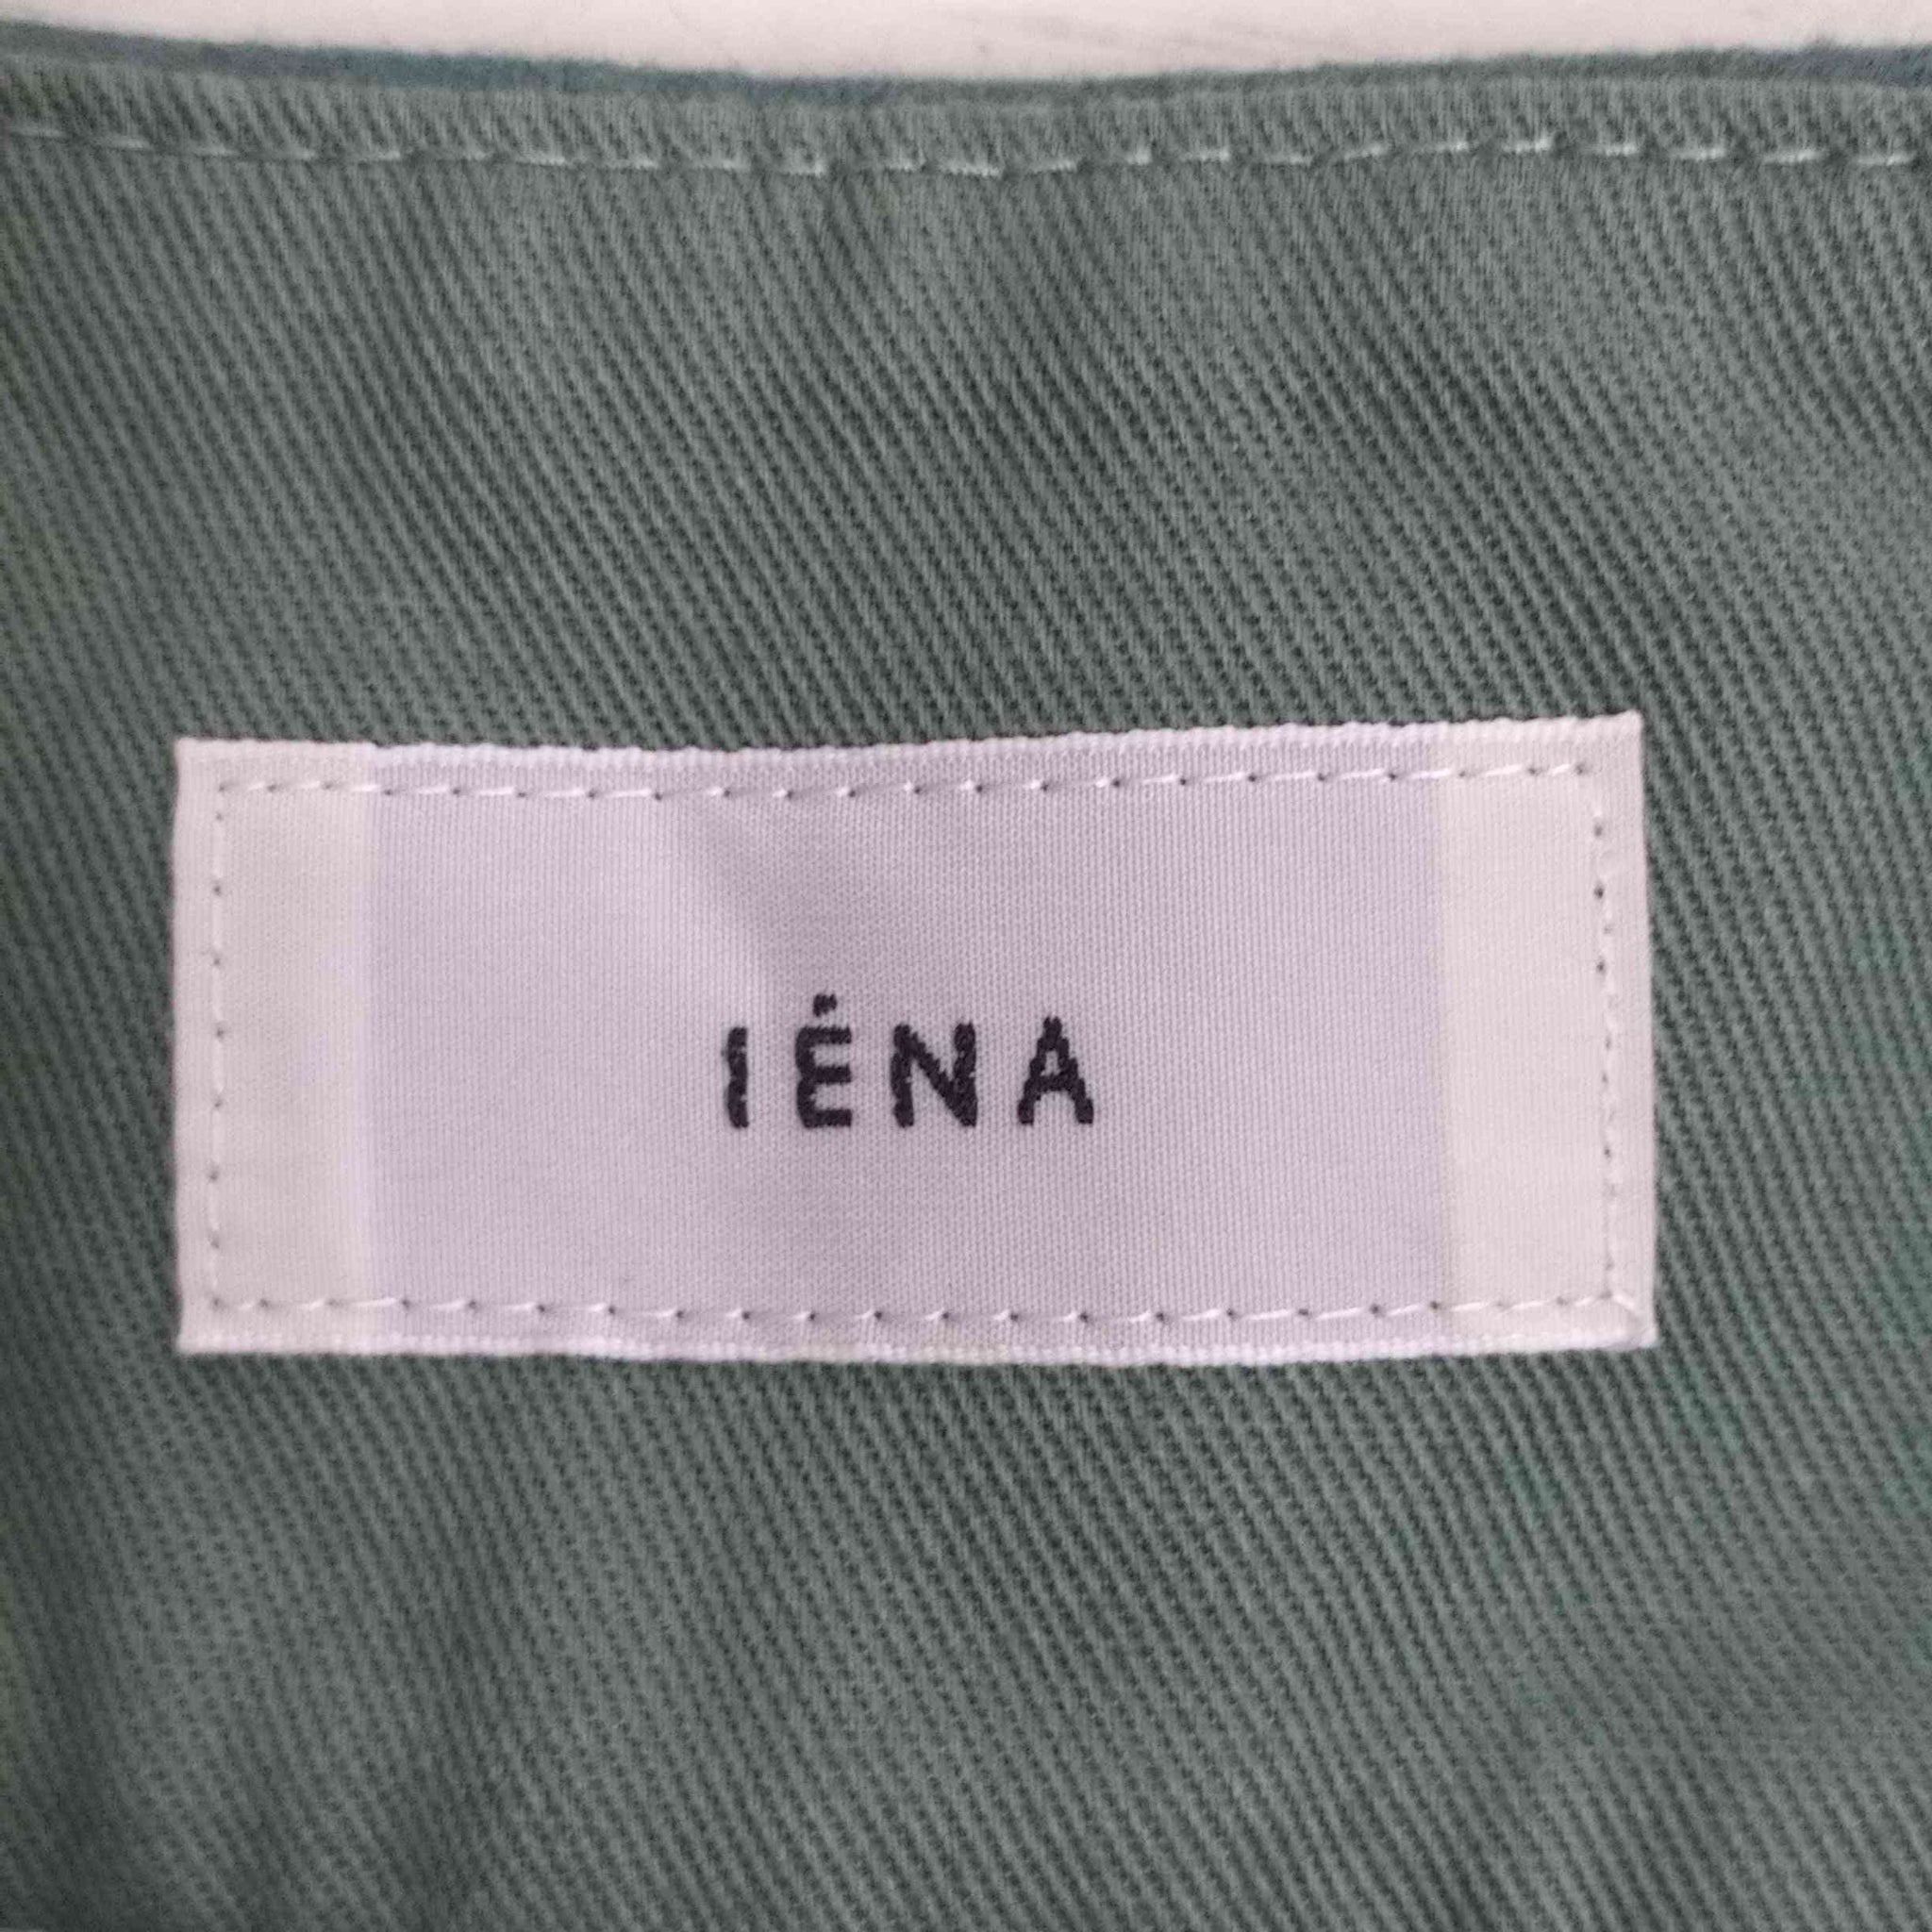 IENA(イエナ)ハード圧縮パンツ